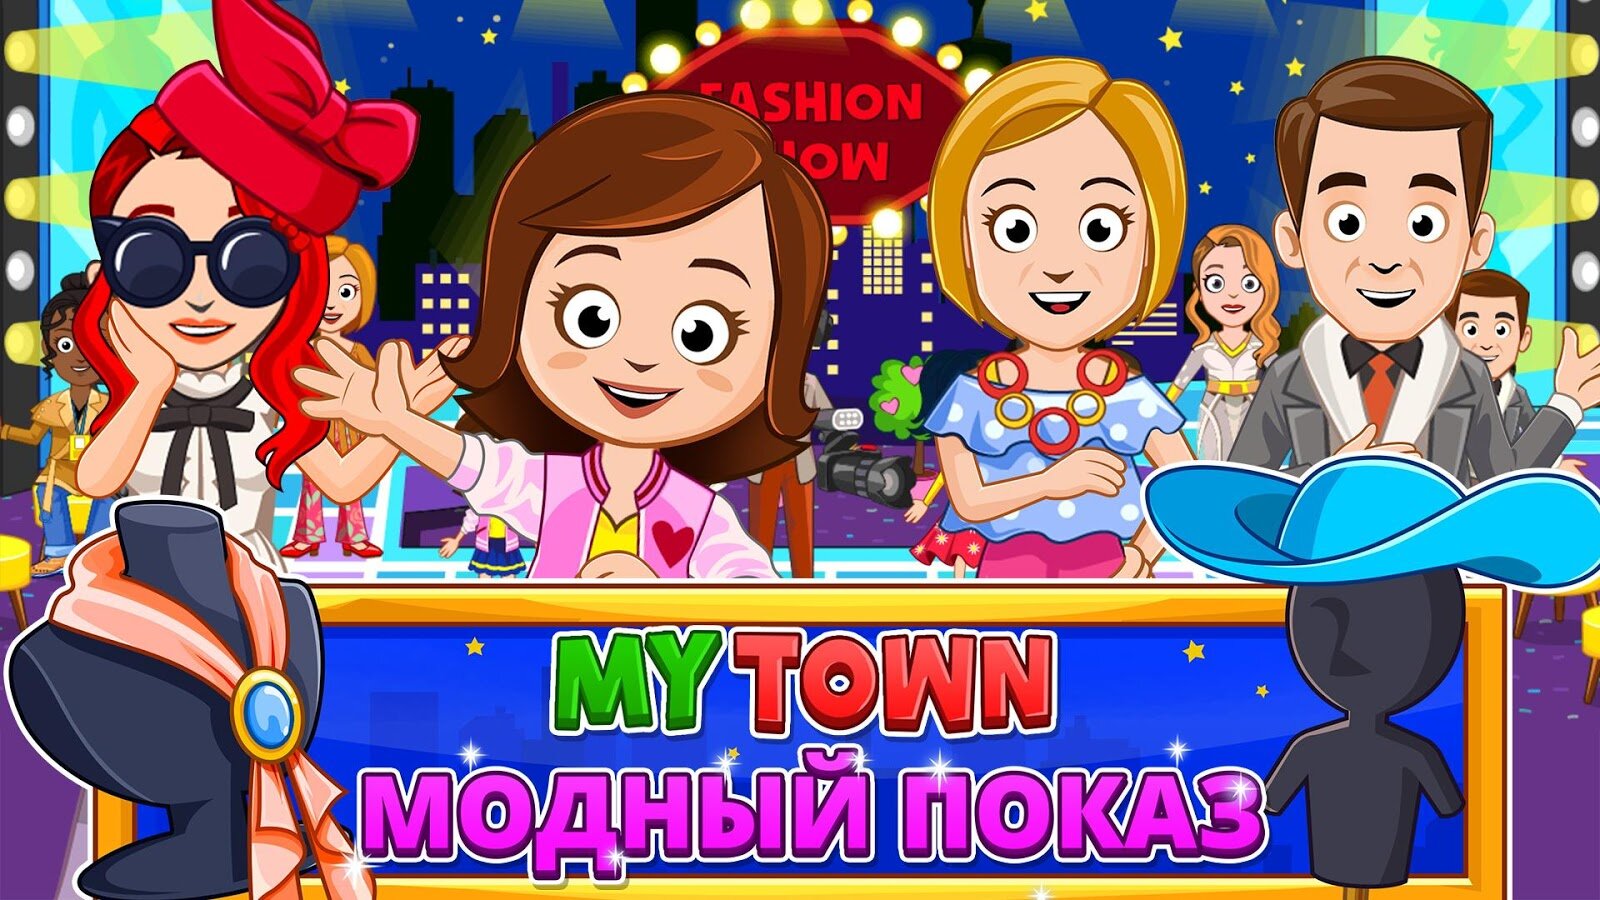 My Town: Fashion Show 7.01.09